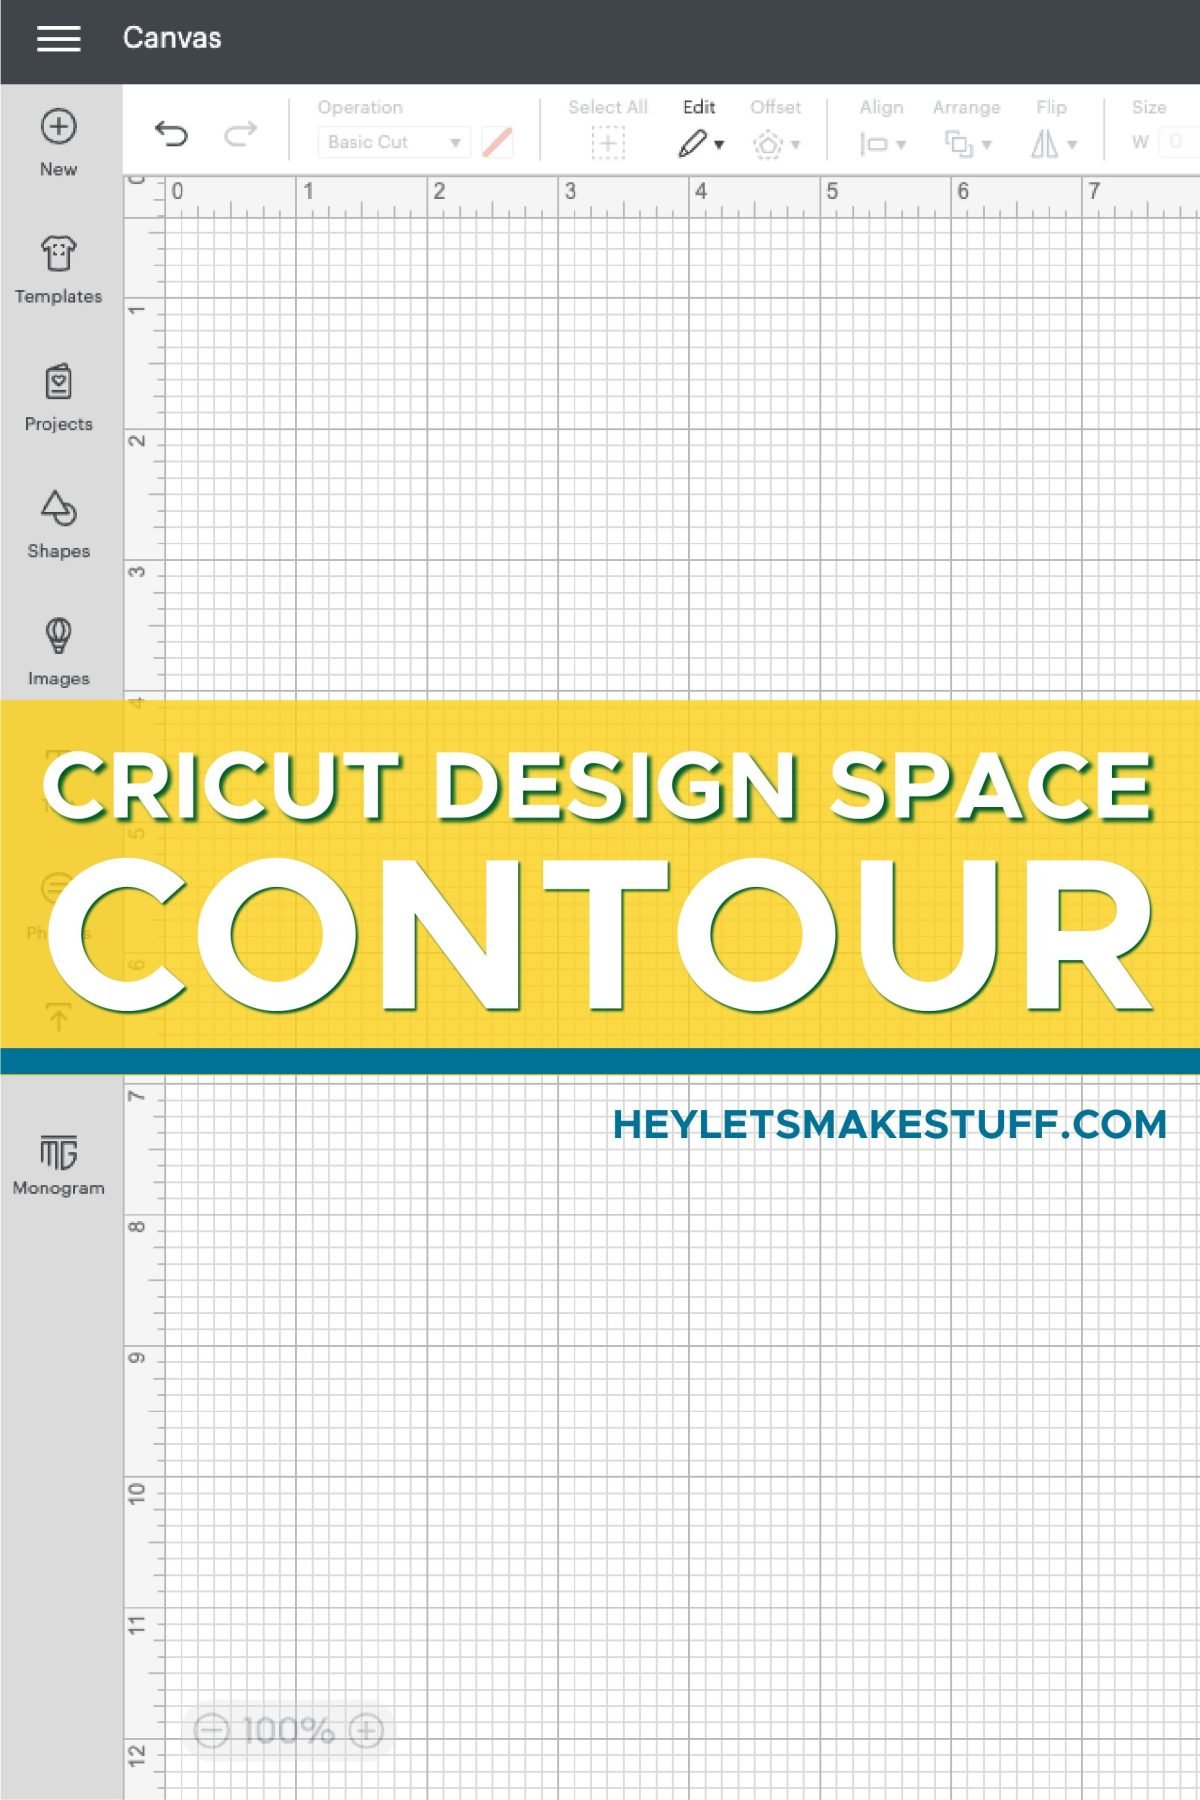 Using Contour in Cricut Design Space - Hey, Let's Make Stuff